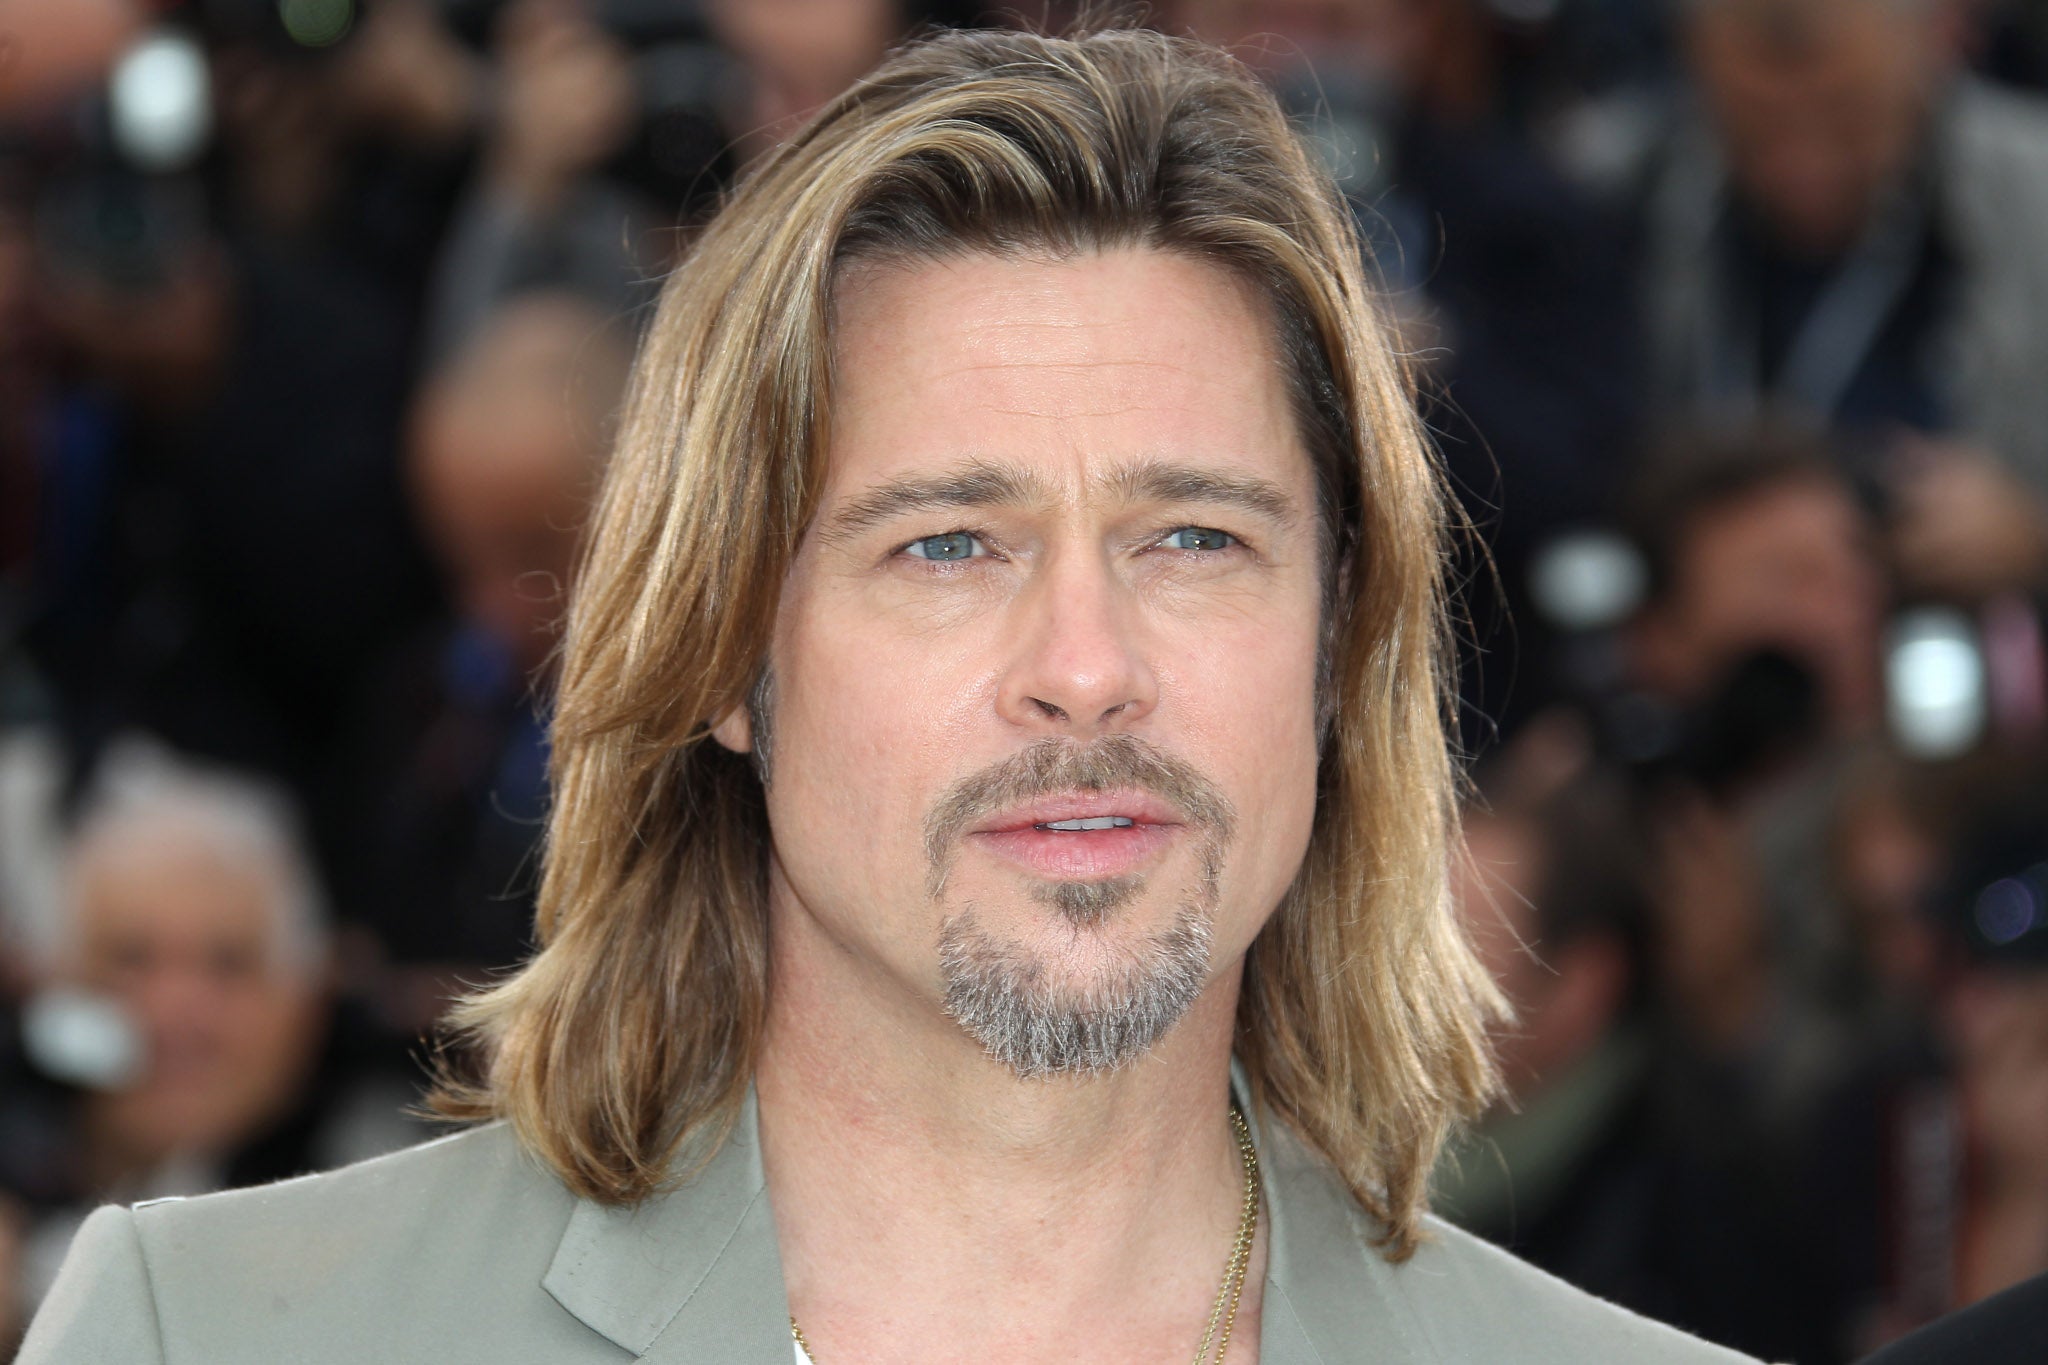 Actor Brad Pitt is 50